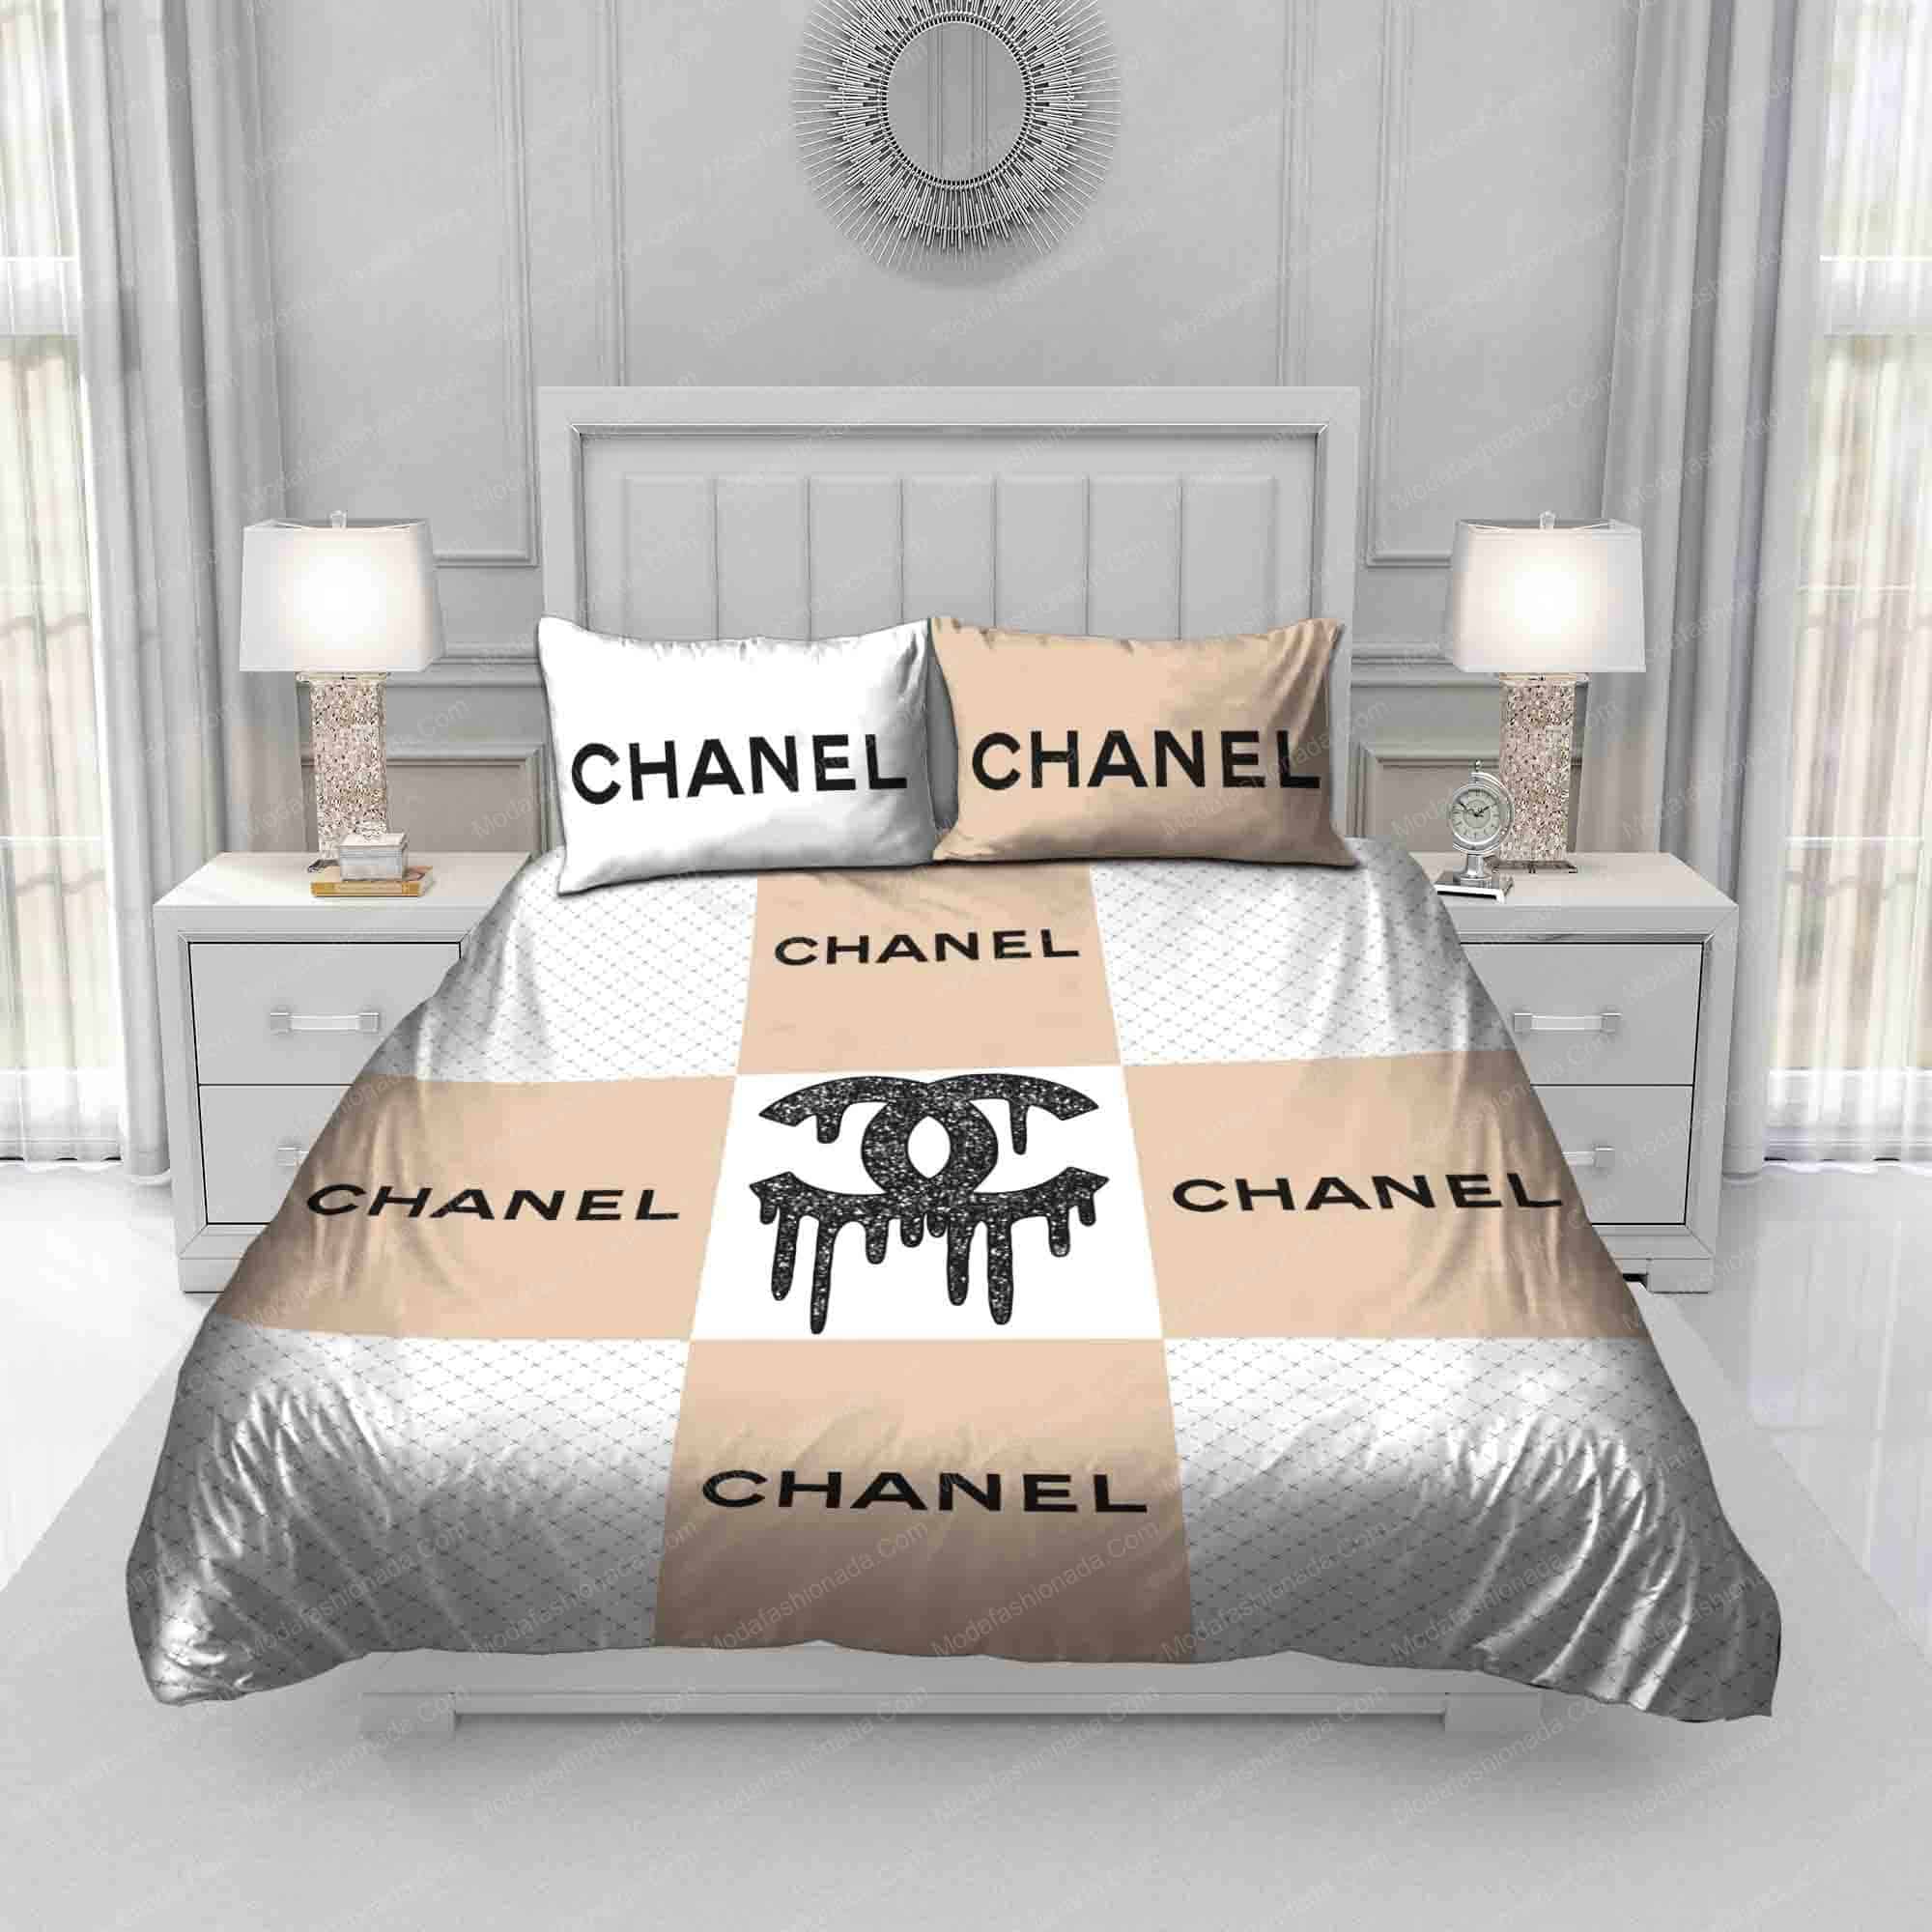 Channel bedding sets Channel bed  Chanel bedding Luxury interior  design living room Chanel bedroom